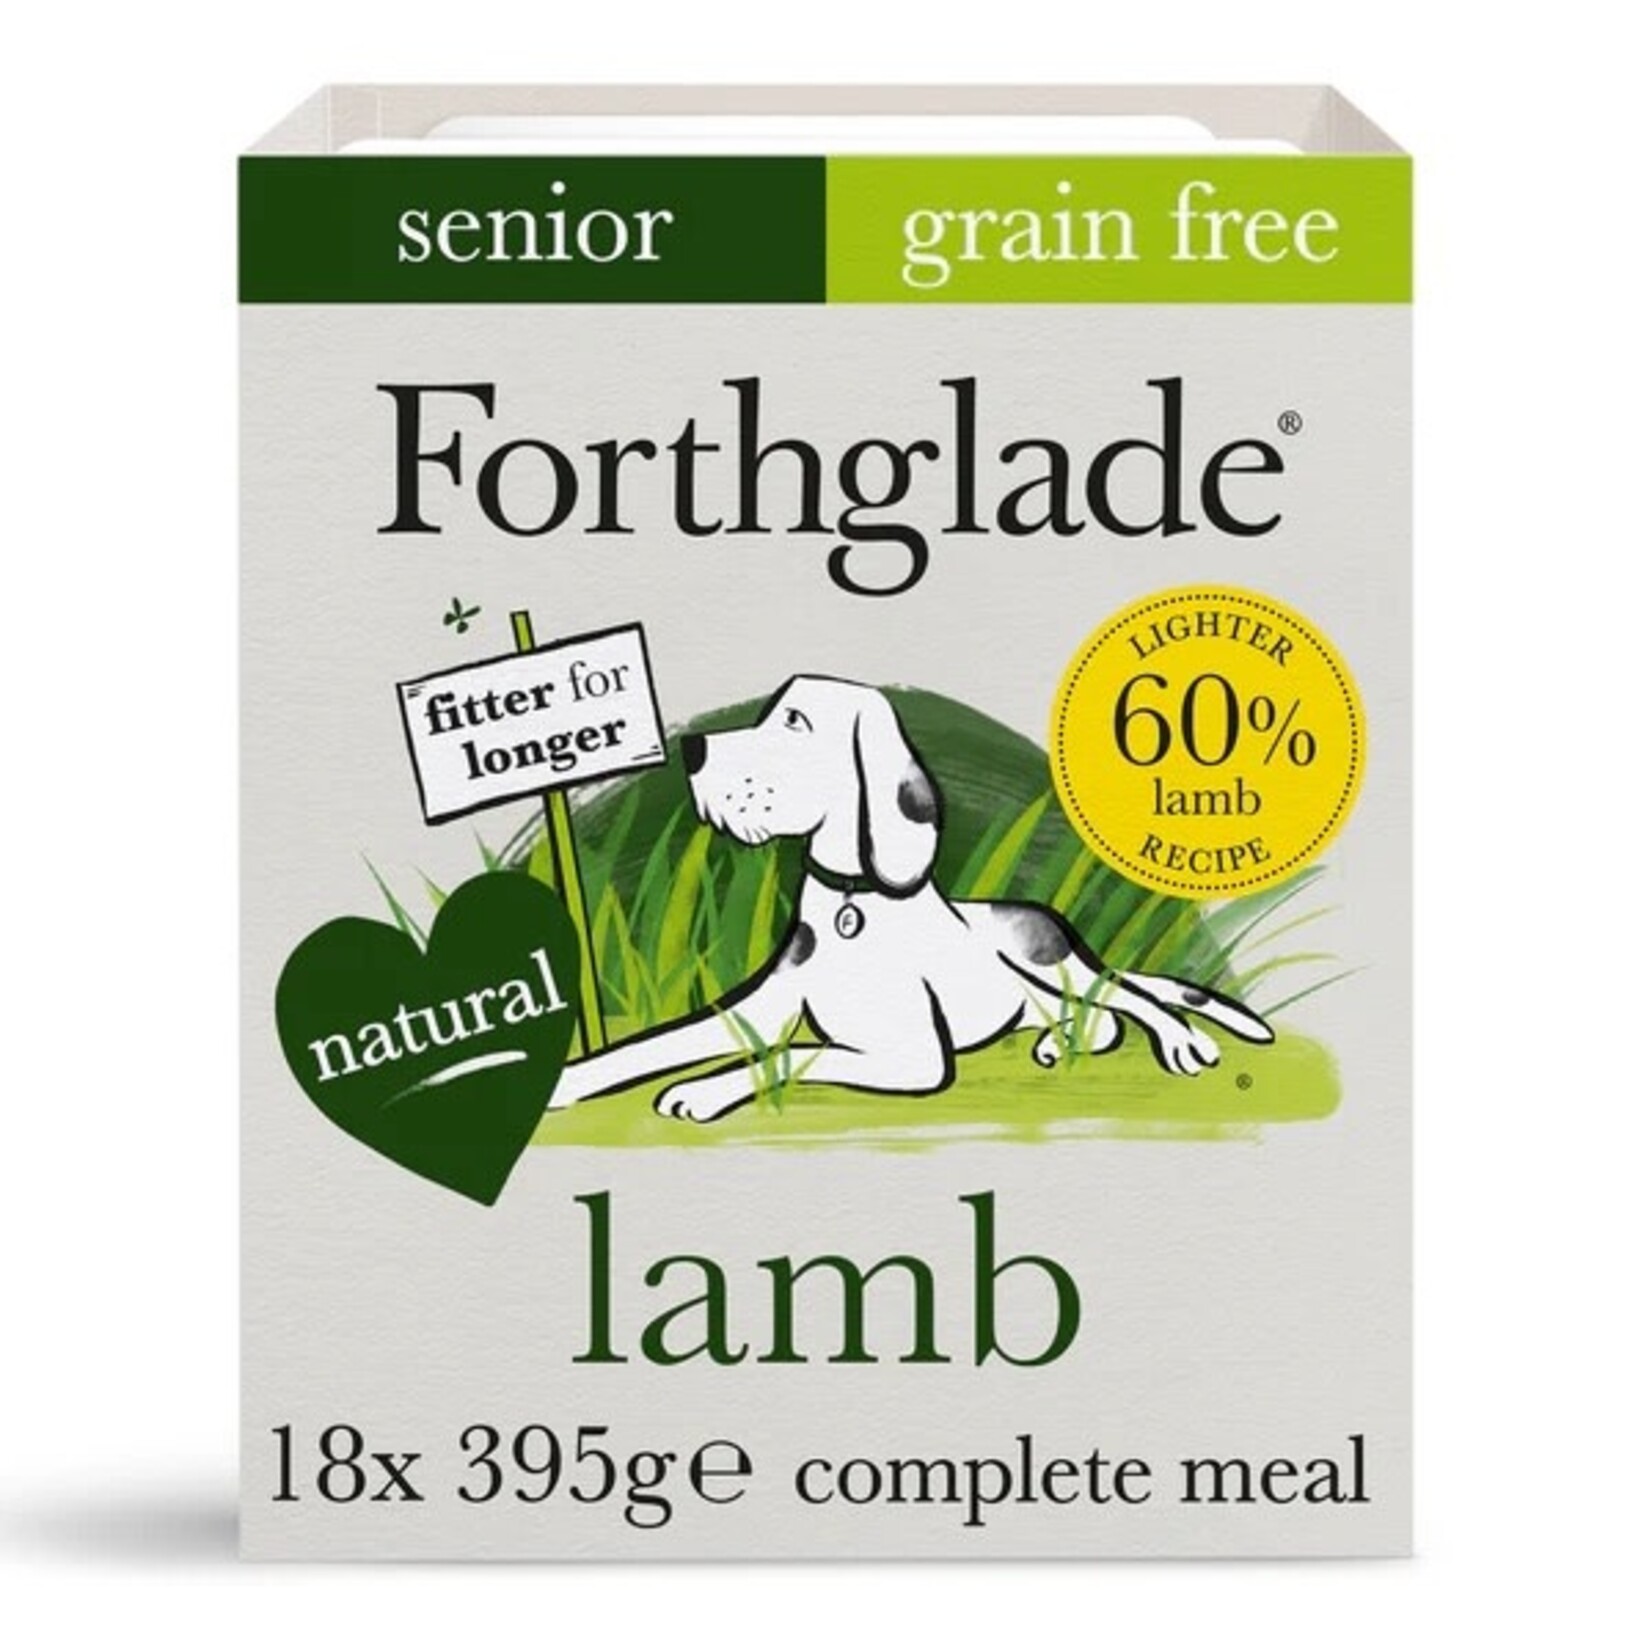 Forthglade Complete Senior Grain Free Lamb with Butternut Squash & Vegetables Wet Dog Food, 395g